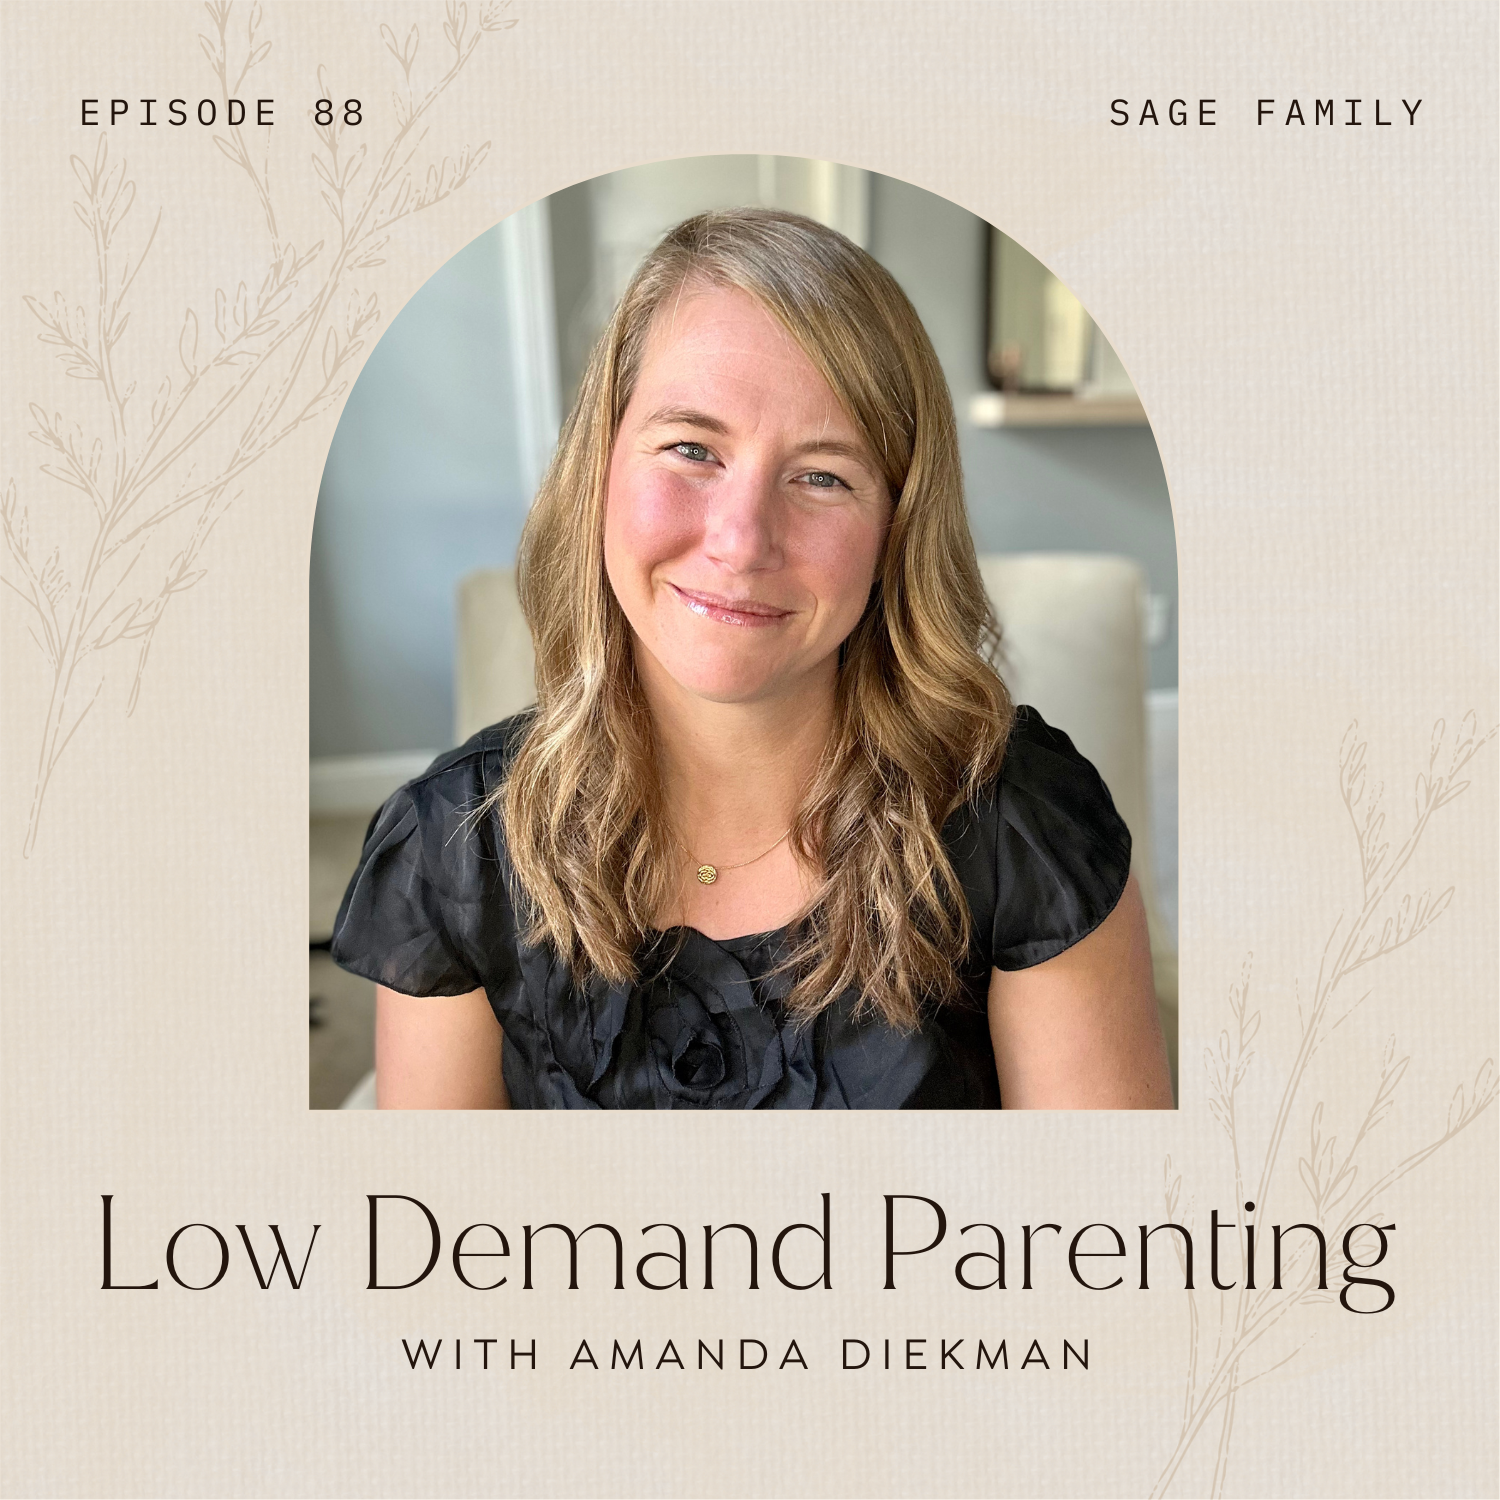 Low Demand Parenting with Amanda Diekman